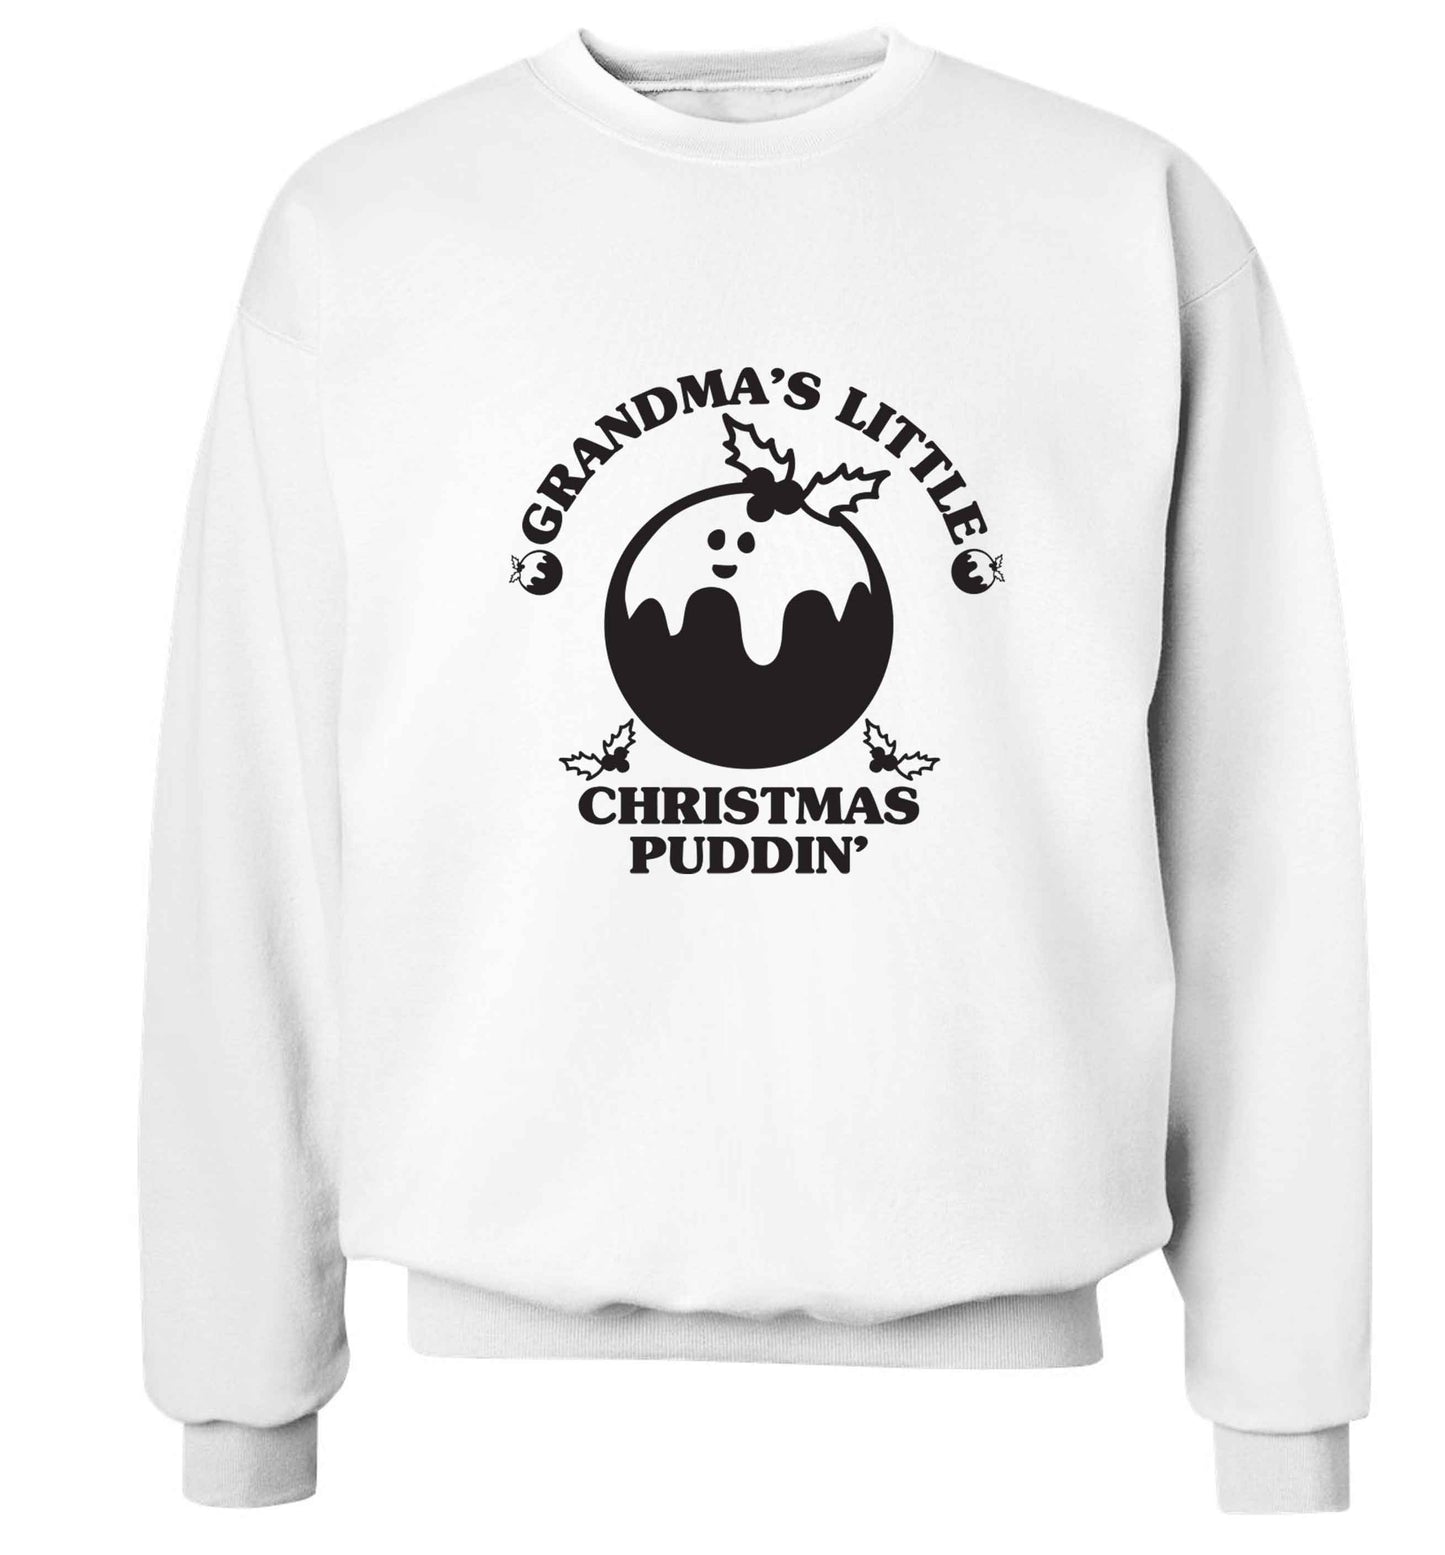 Grandma's little Christmas puddin' Adult's unisex white Sweater 2XL